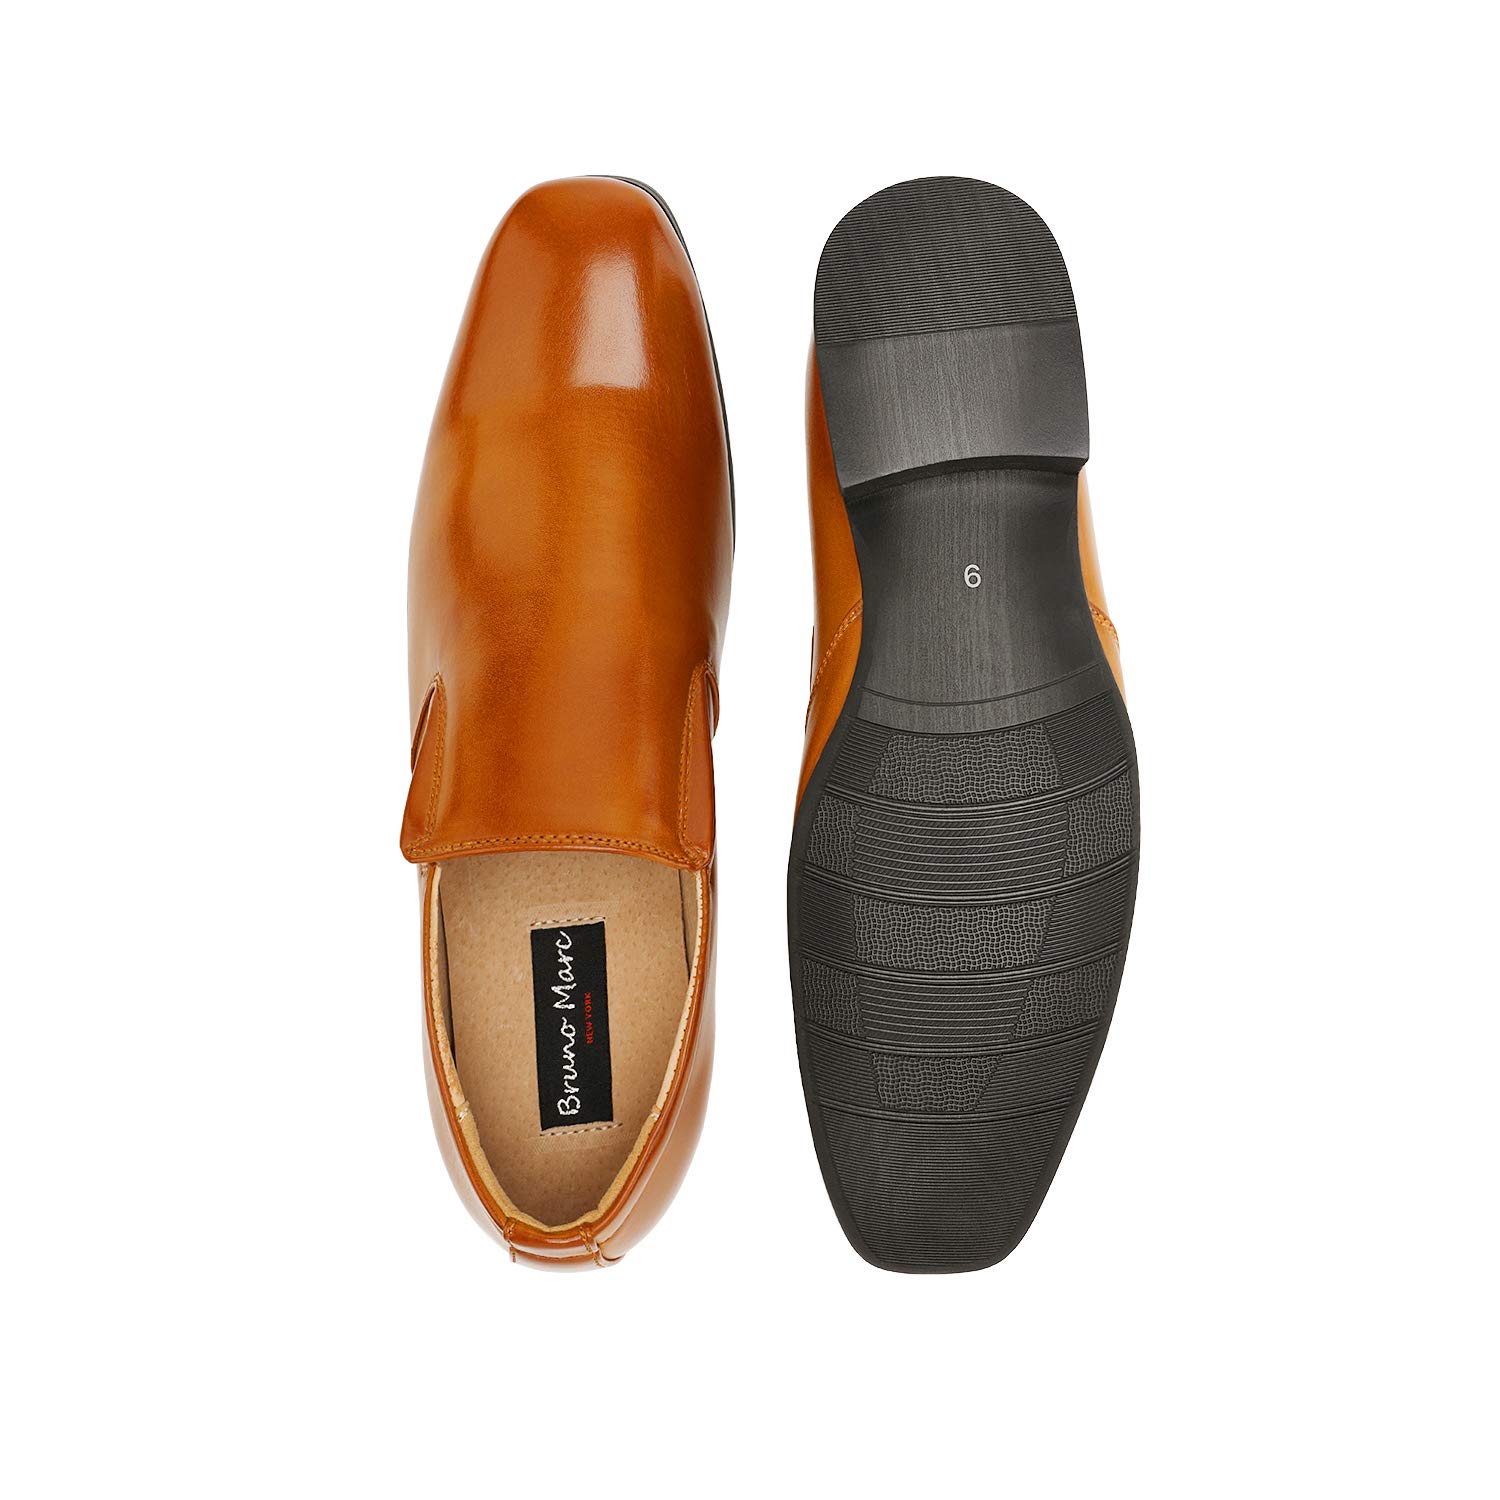 Mua Bruno Marc Men's Leather Lined Dress Loafers Slip-On Shoes trên ...